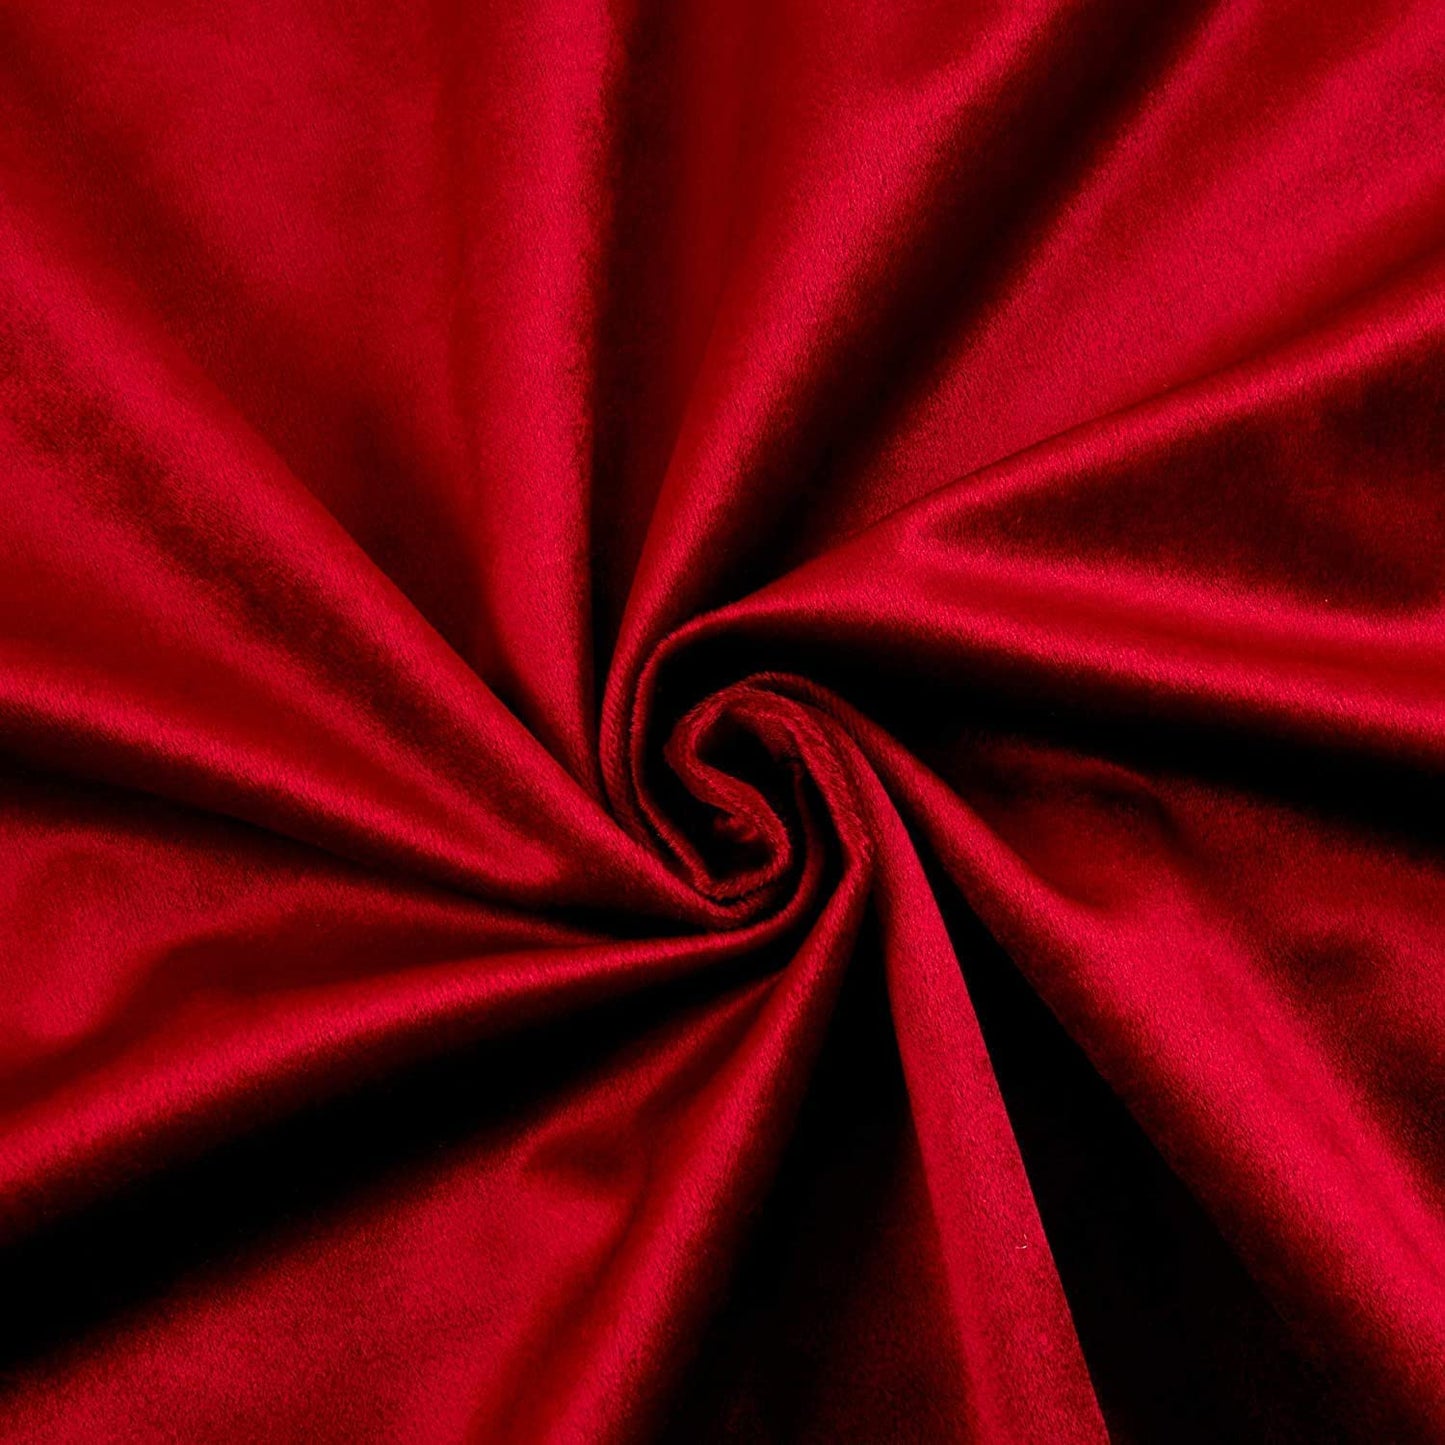 Upholstery Royal Velvet Fabric, 100% Polyester Upholstery Fabric (1 Yard, Cherry)